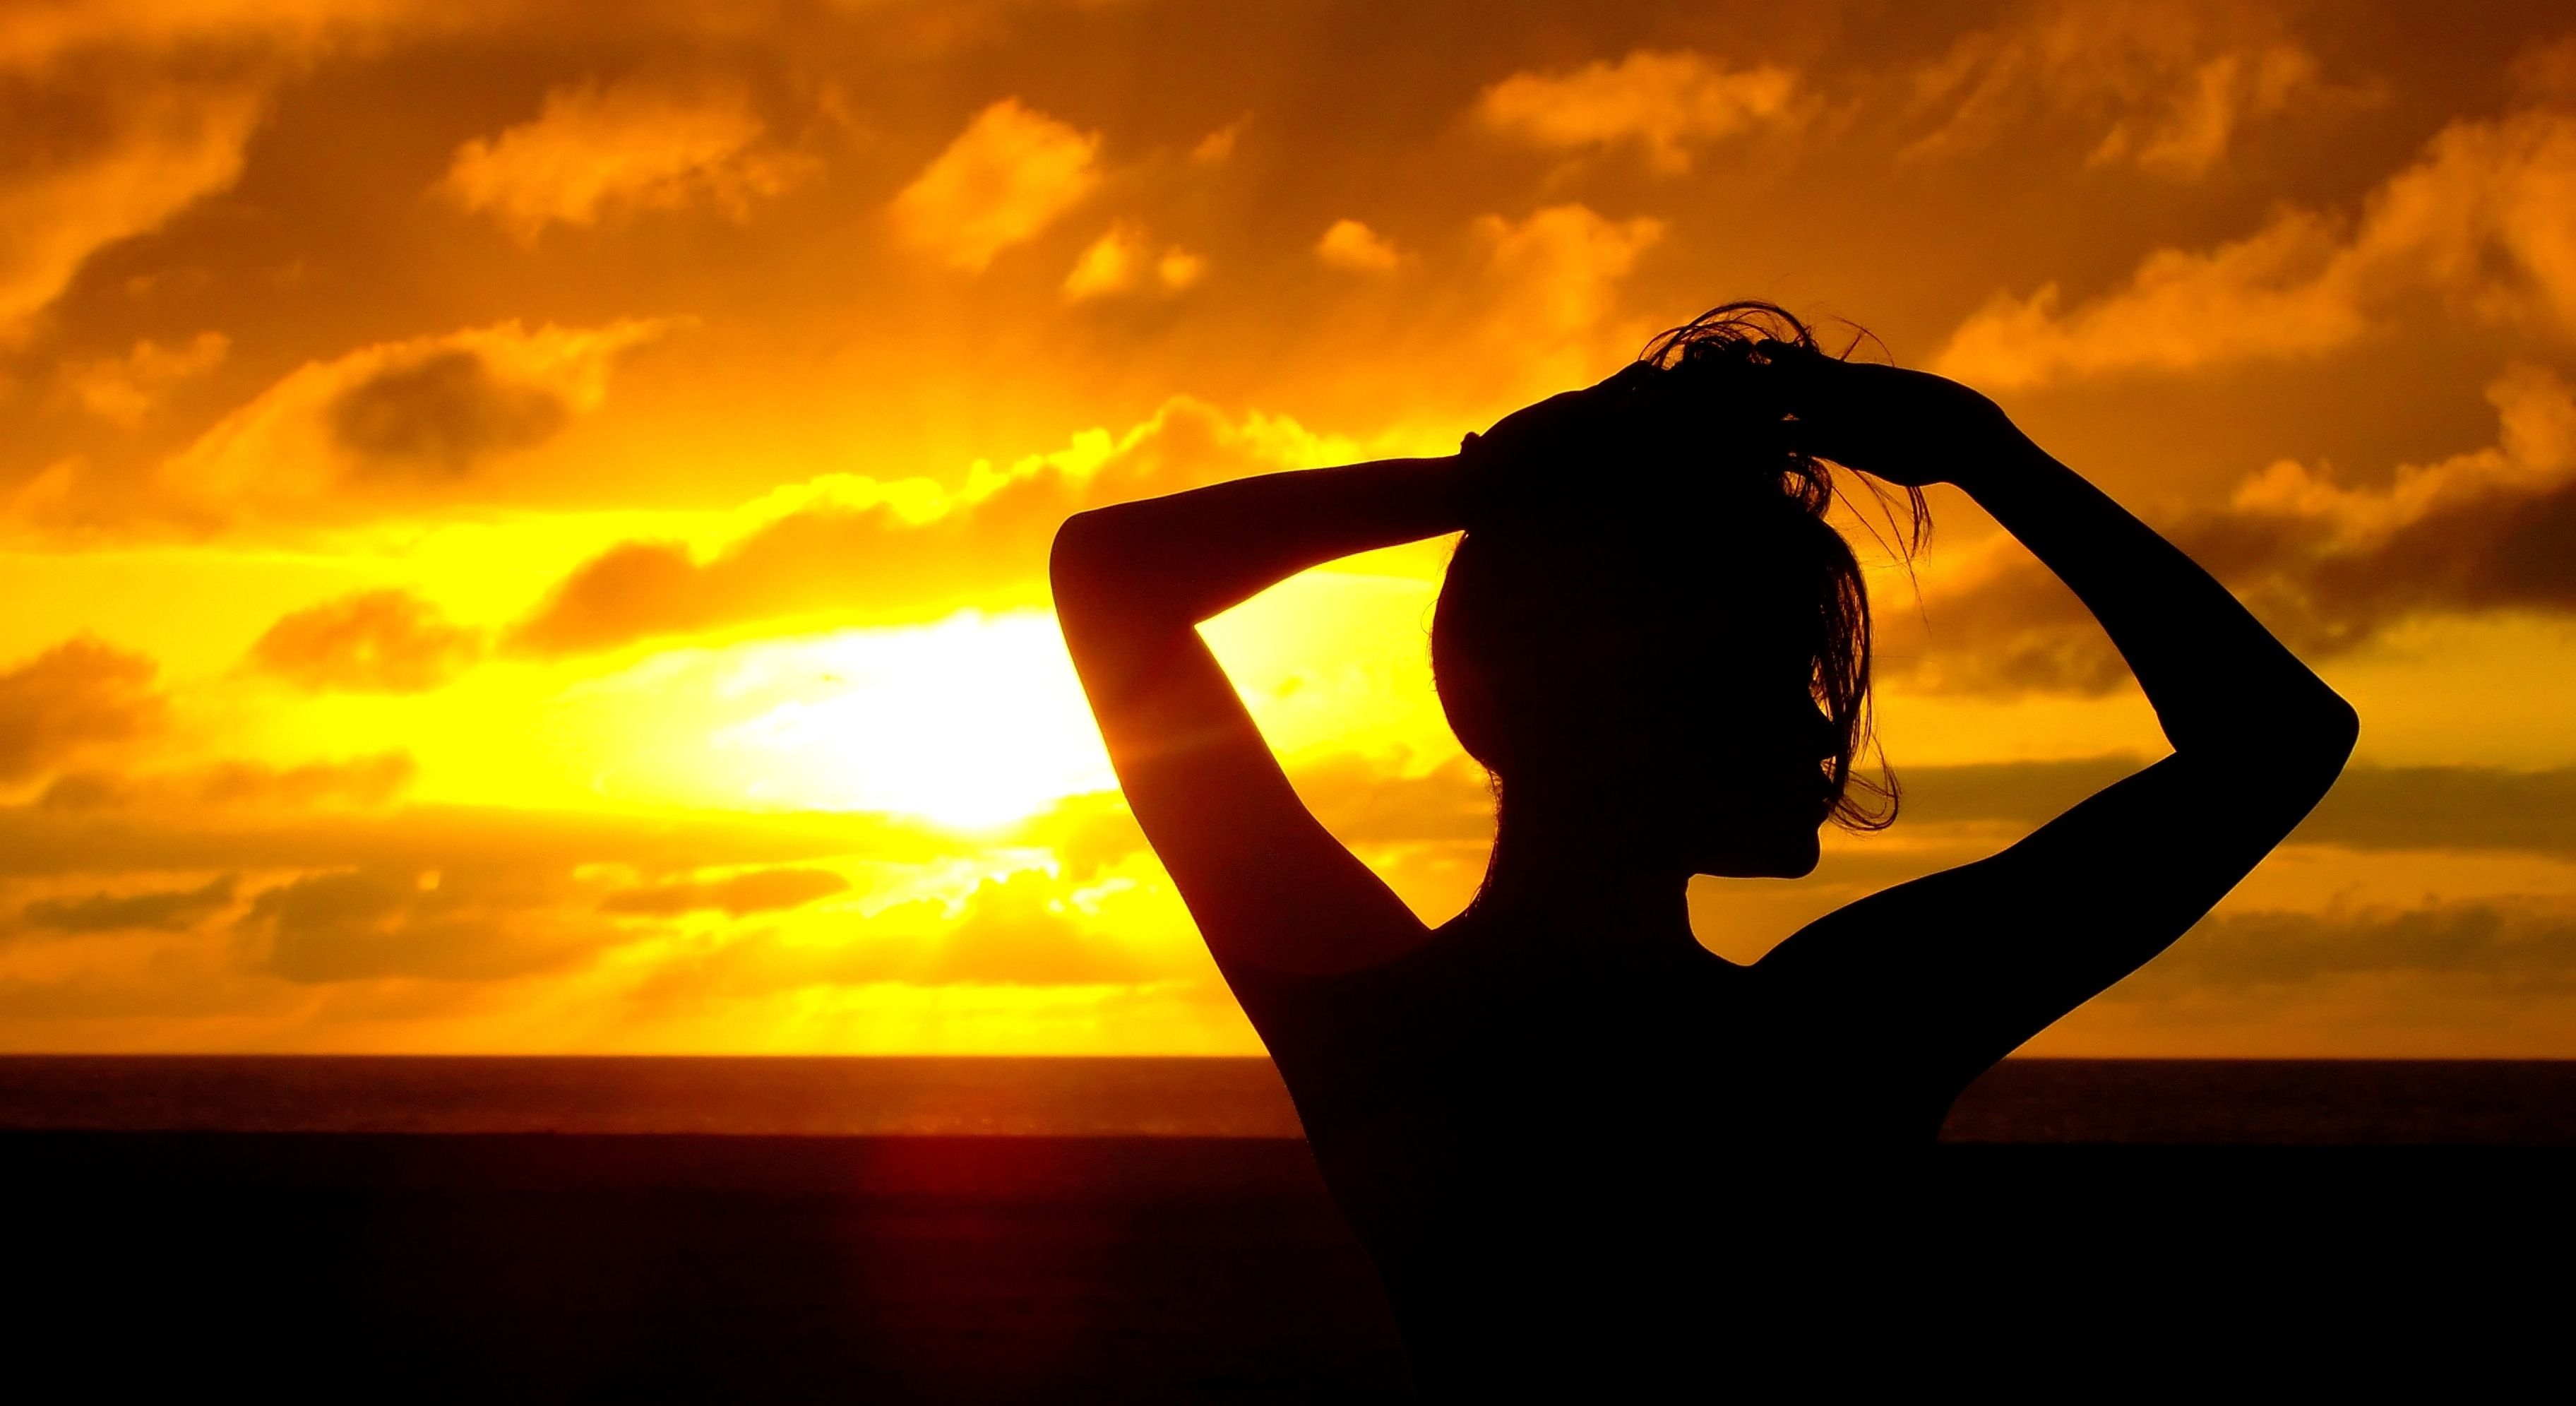 Beautiful Sunset Beach Bali With Girl Pose Wallpaper